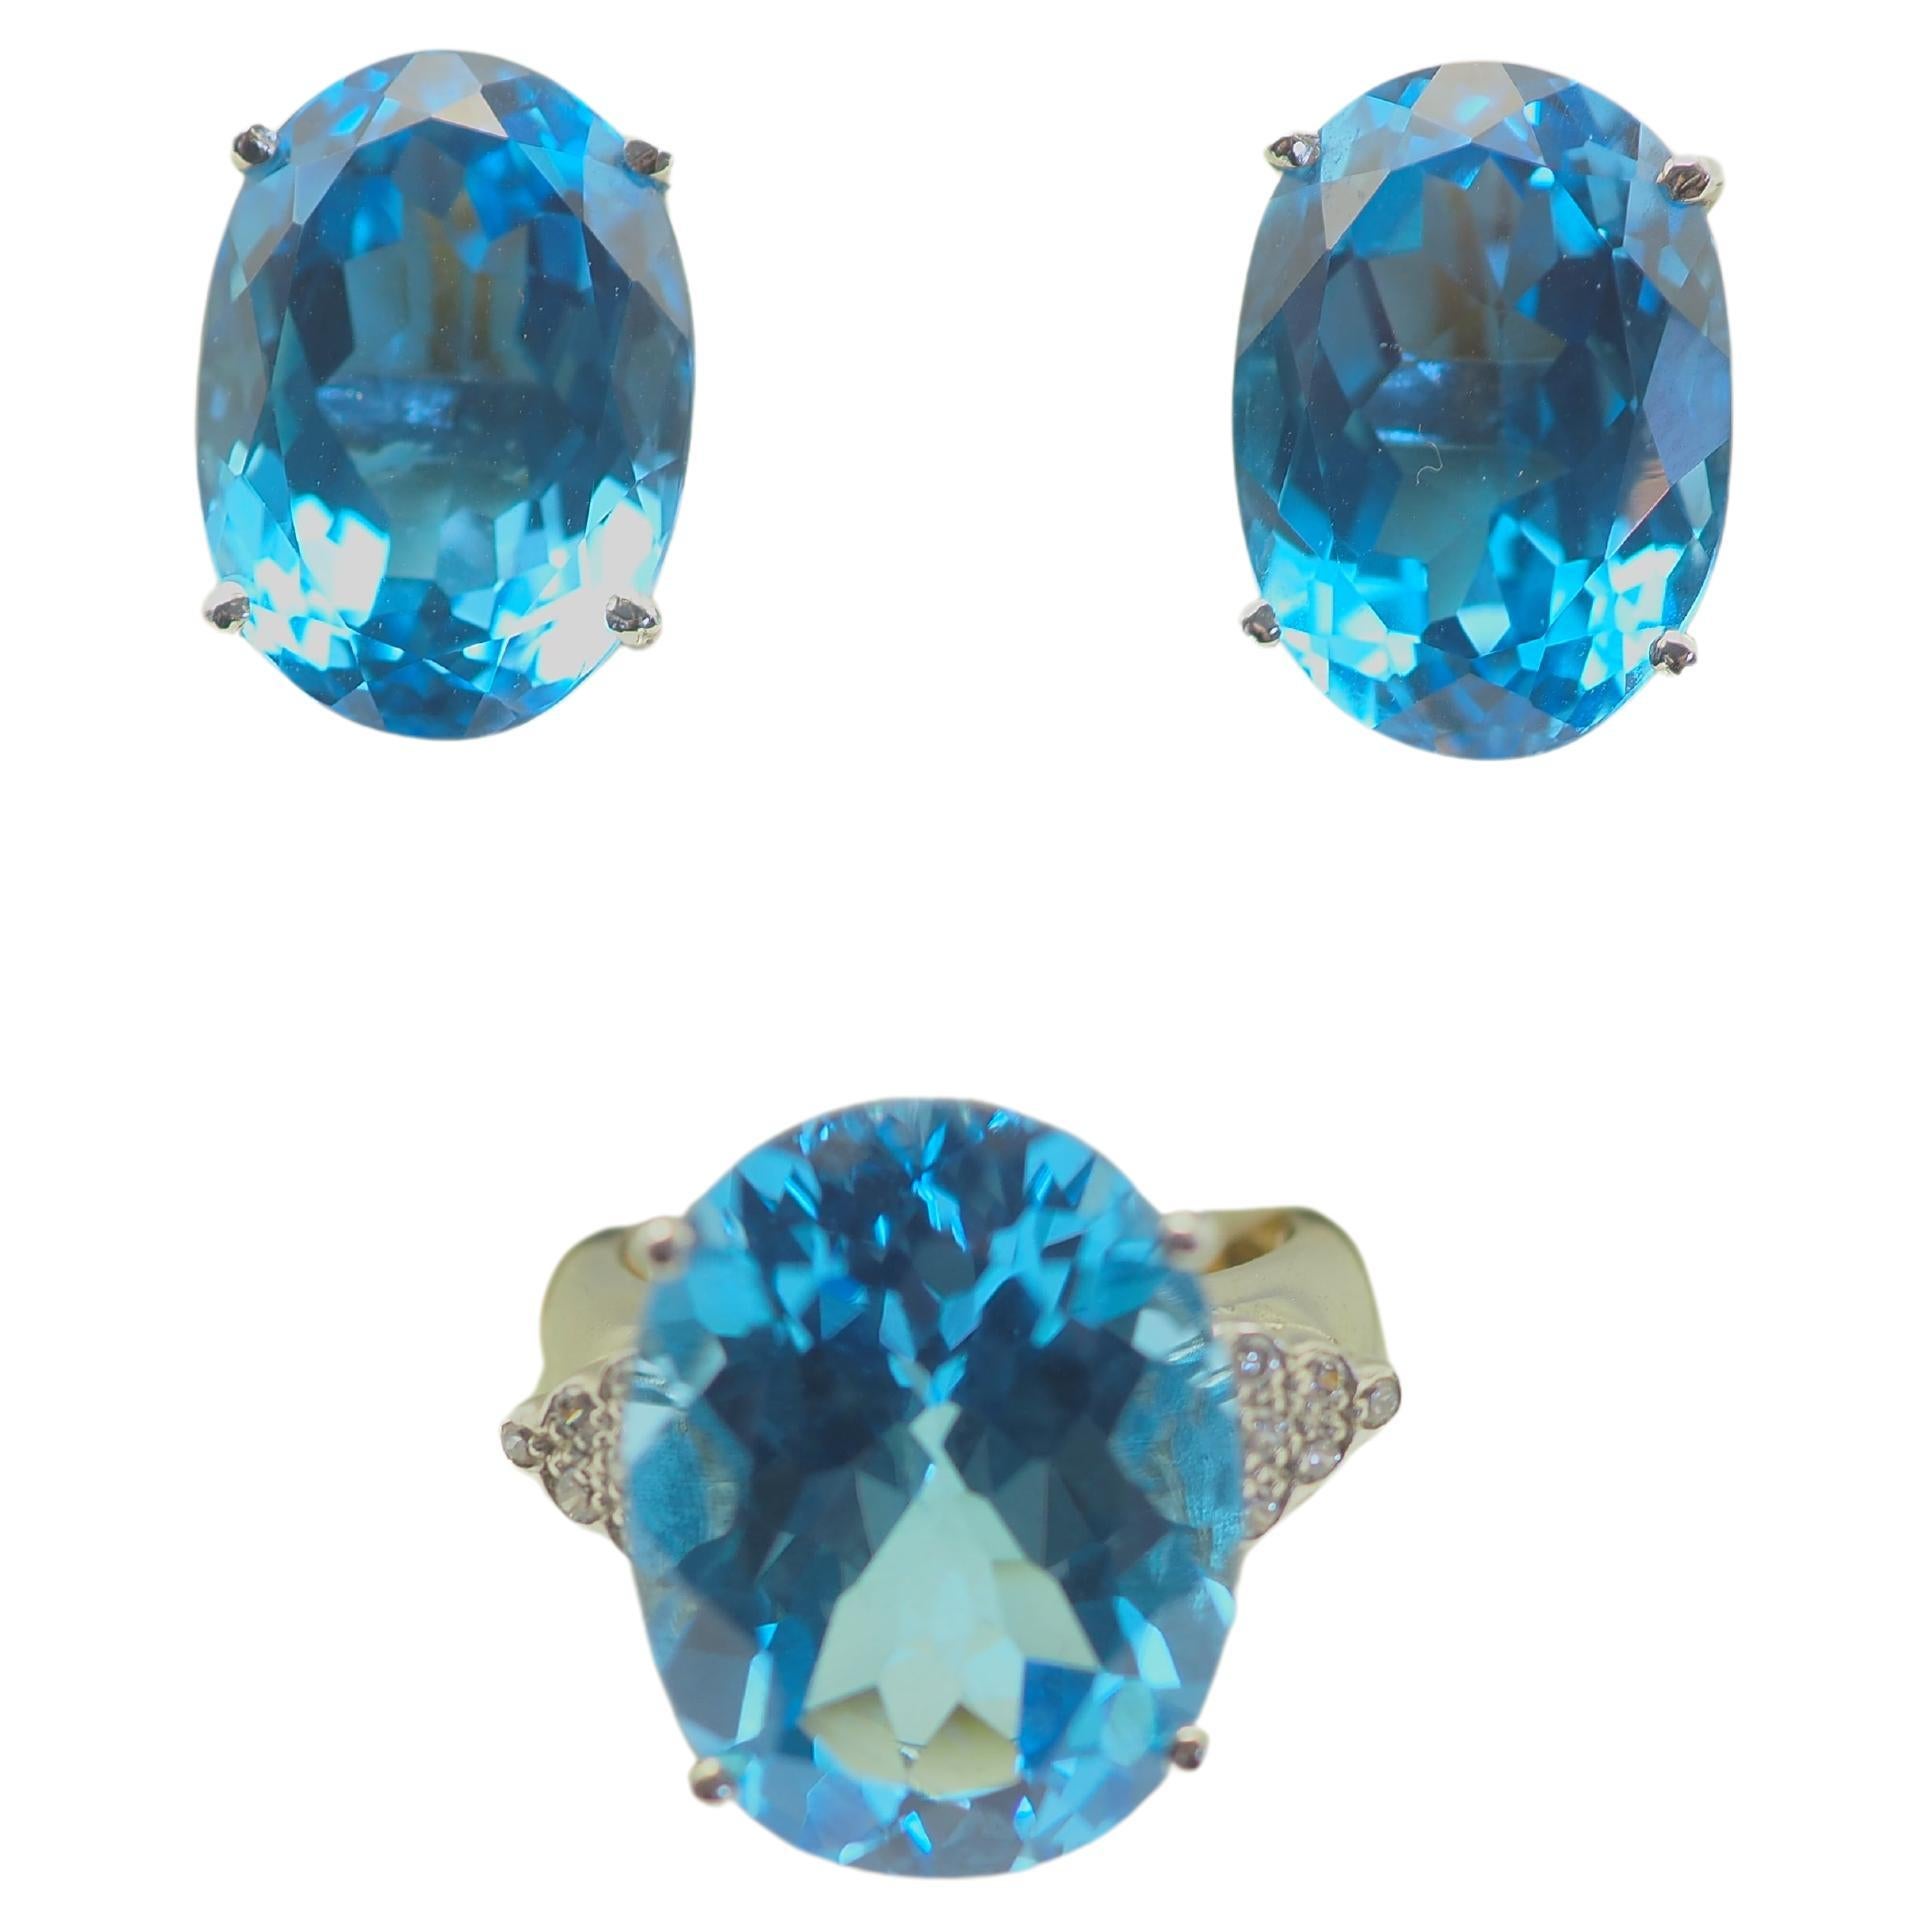 Sterling Silver Set 56.24ctw Blue Topaz Ring & Earrings, Large Gemstone